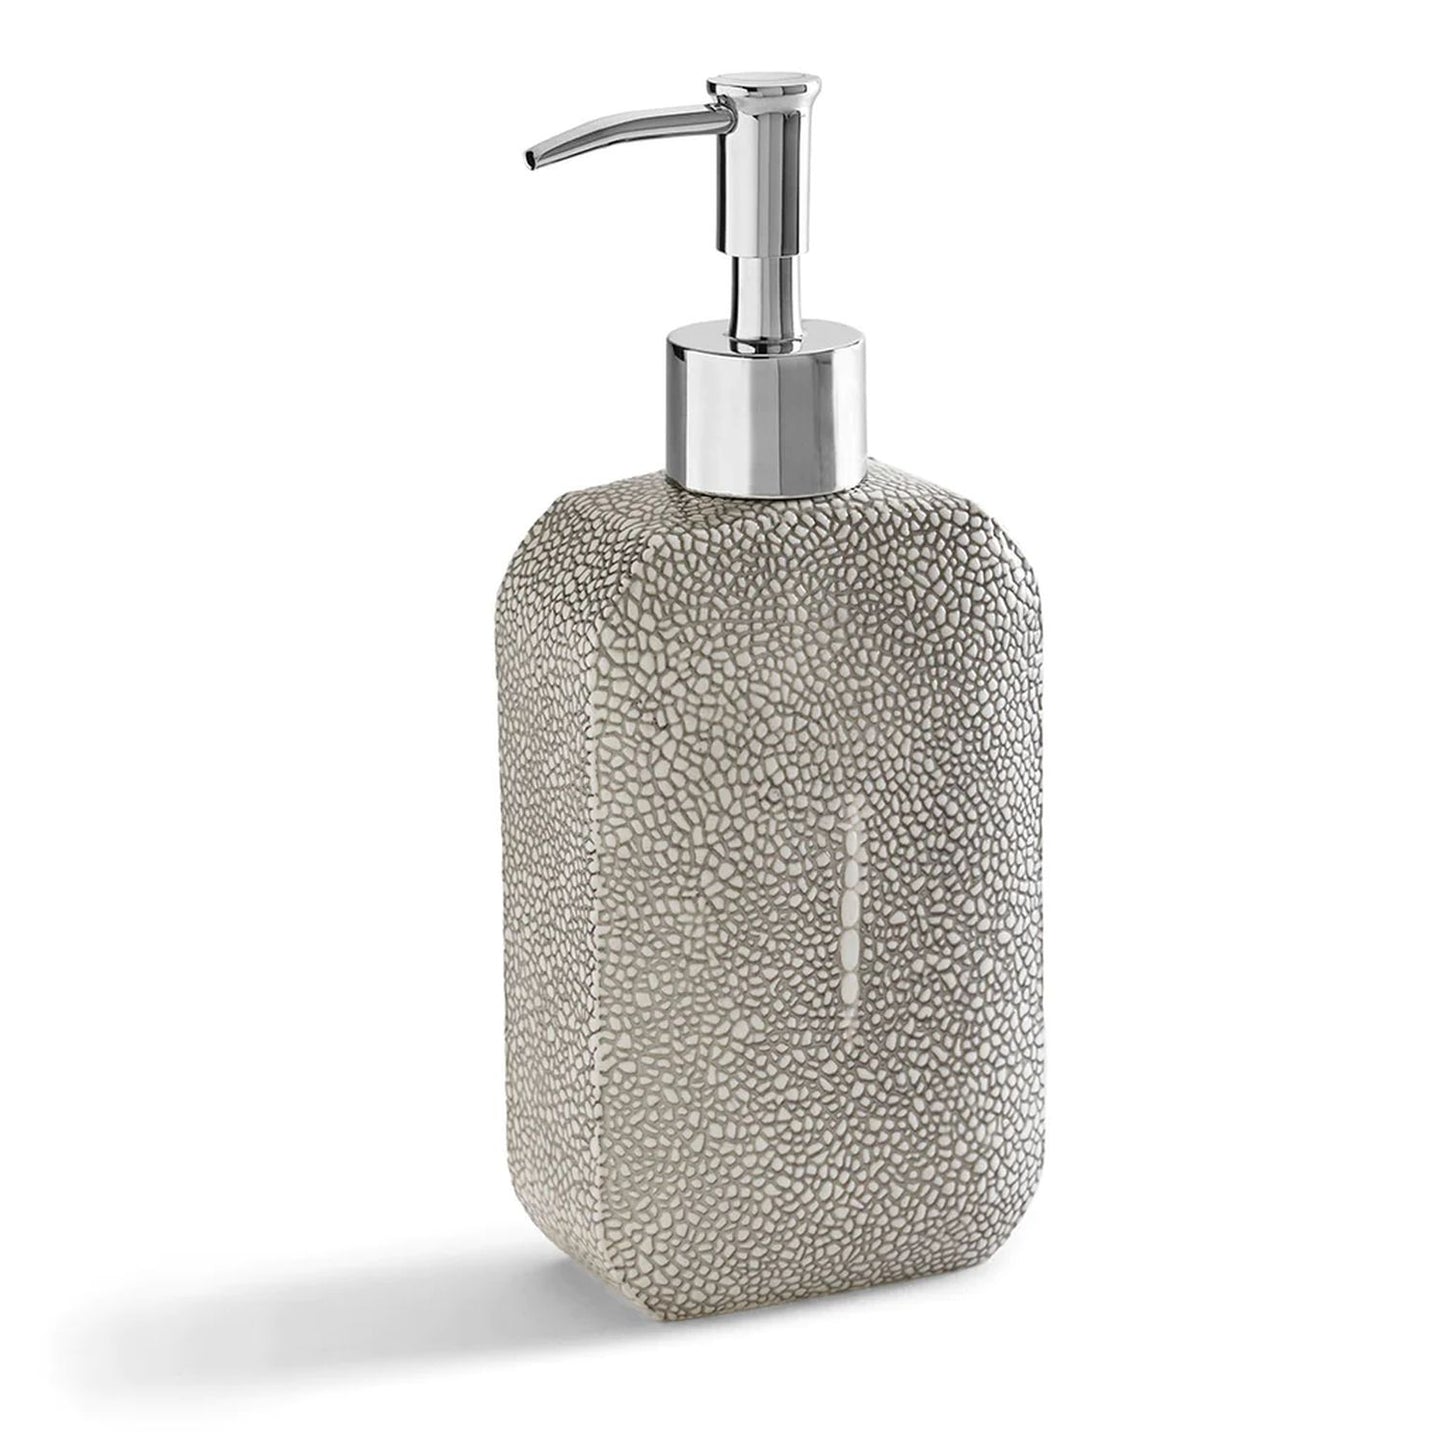 Kassatex Shagreen Bath Accessories Lotion Dispenser